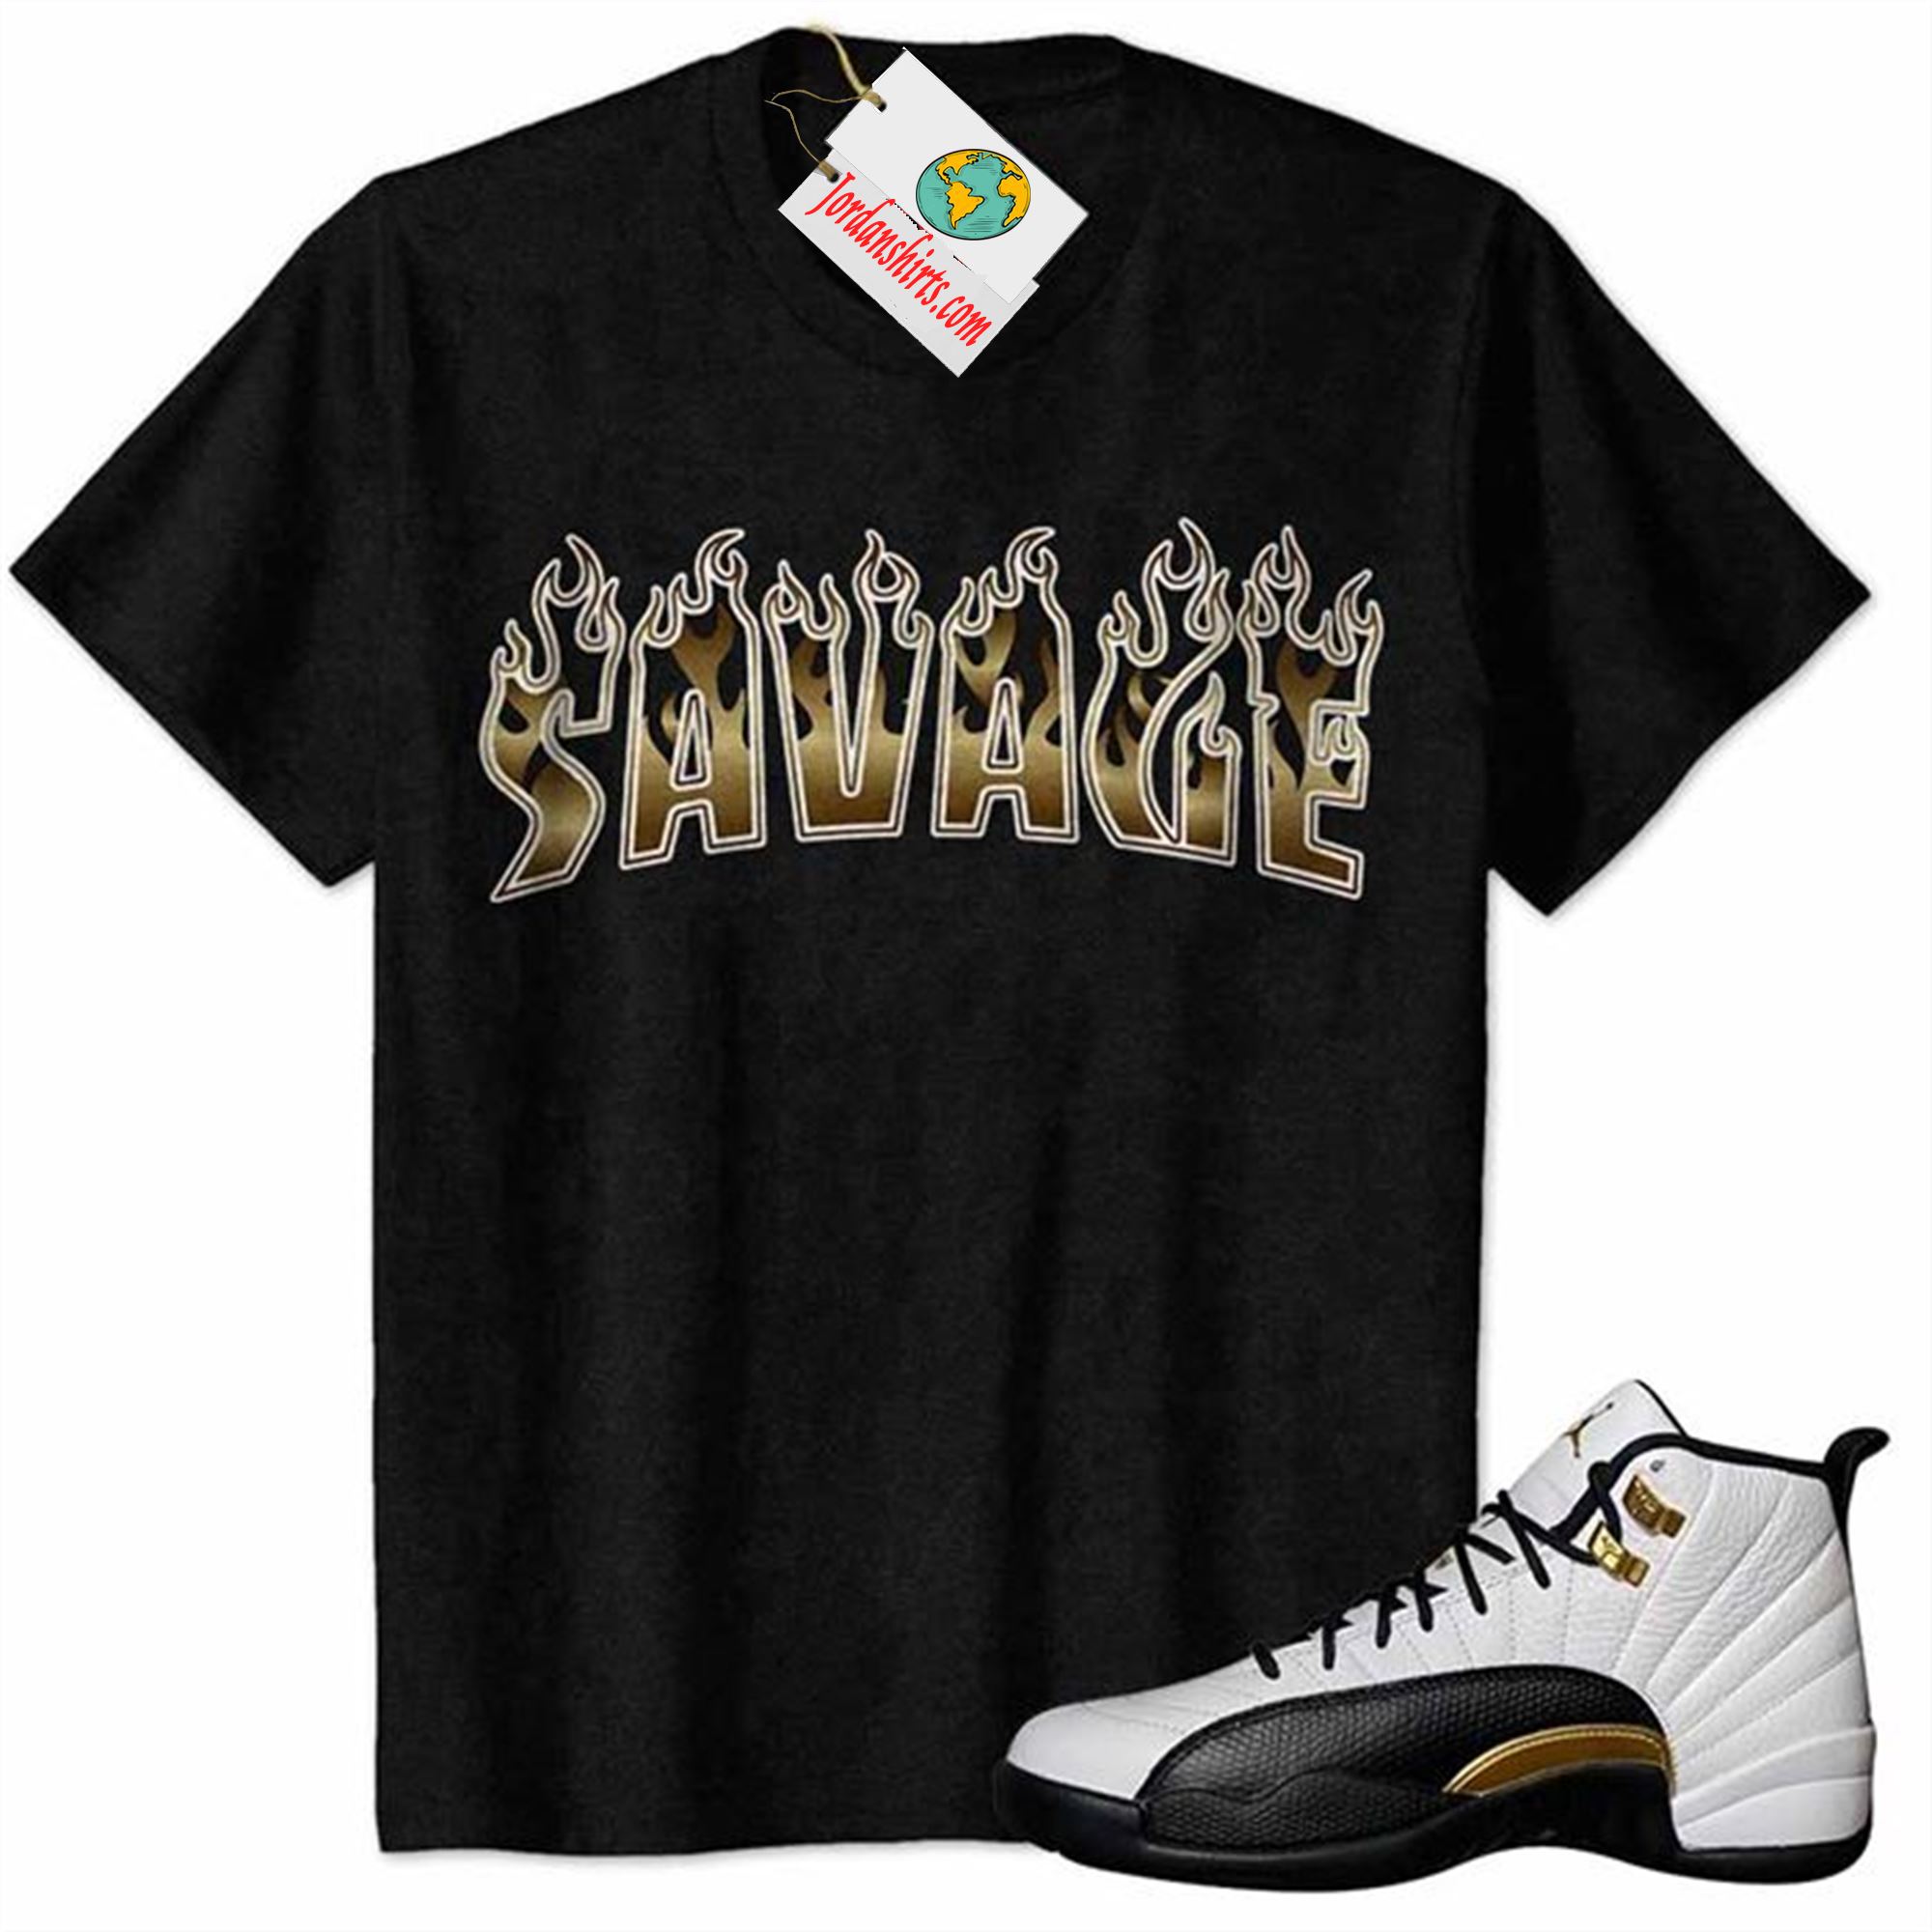 Jordan 12 Shirt, Savage Fire Style Black Air Jordan 12 Royalty 12s Full Size Up To 5xl